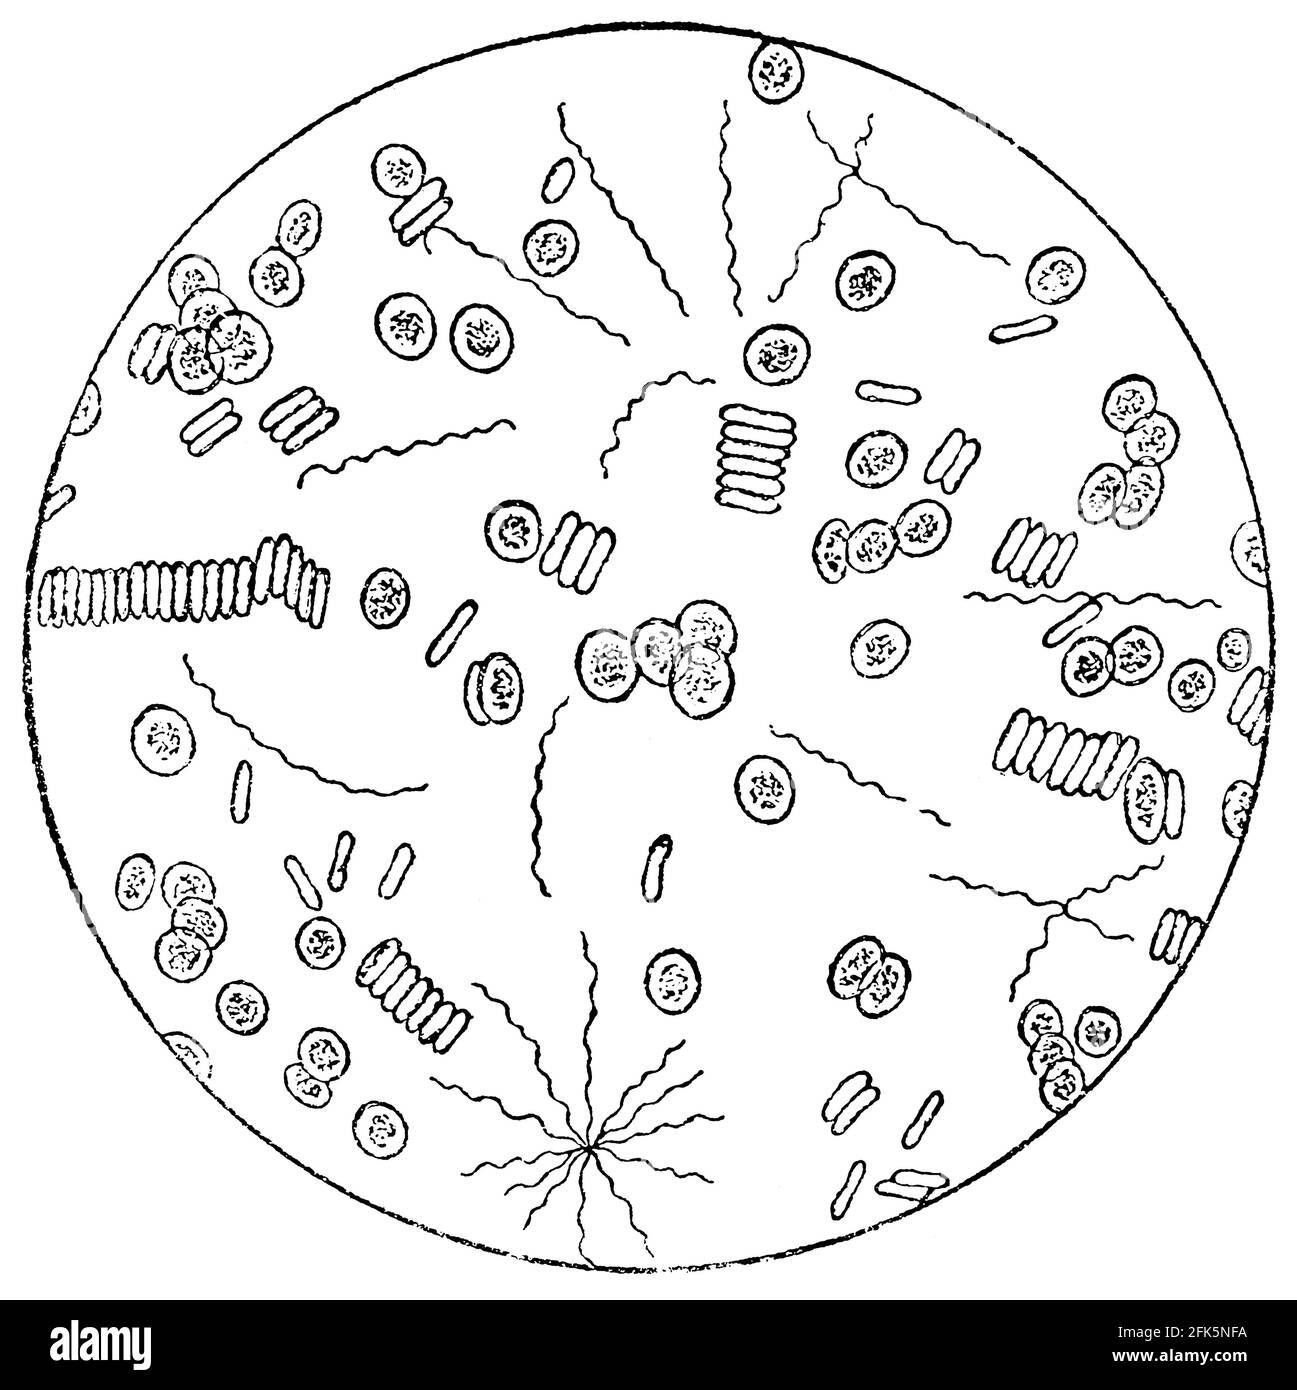 Gram-negative bacteria of Spirillum. Illustration of the 19th century. Germany. White background. Stock Photo